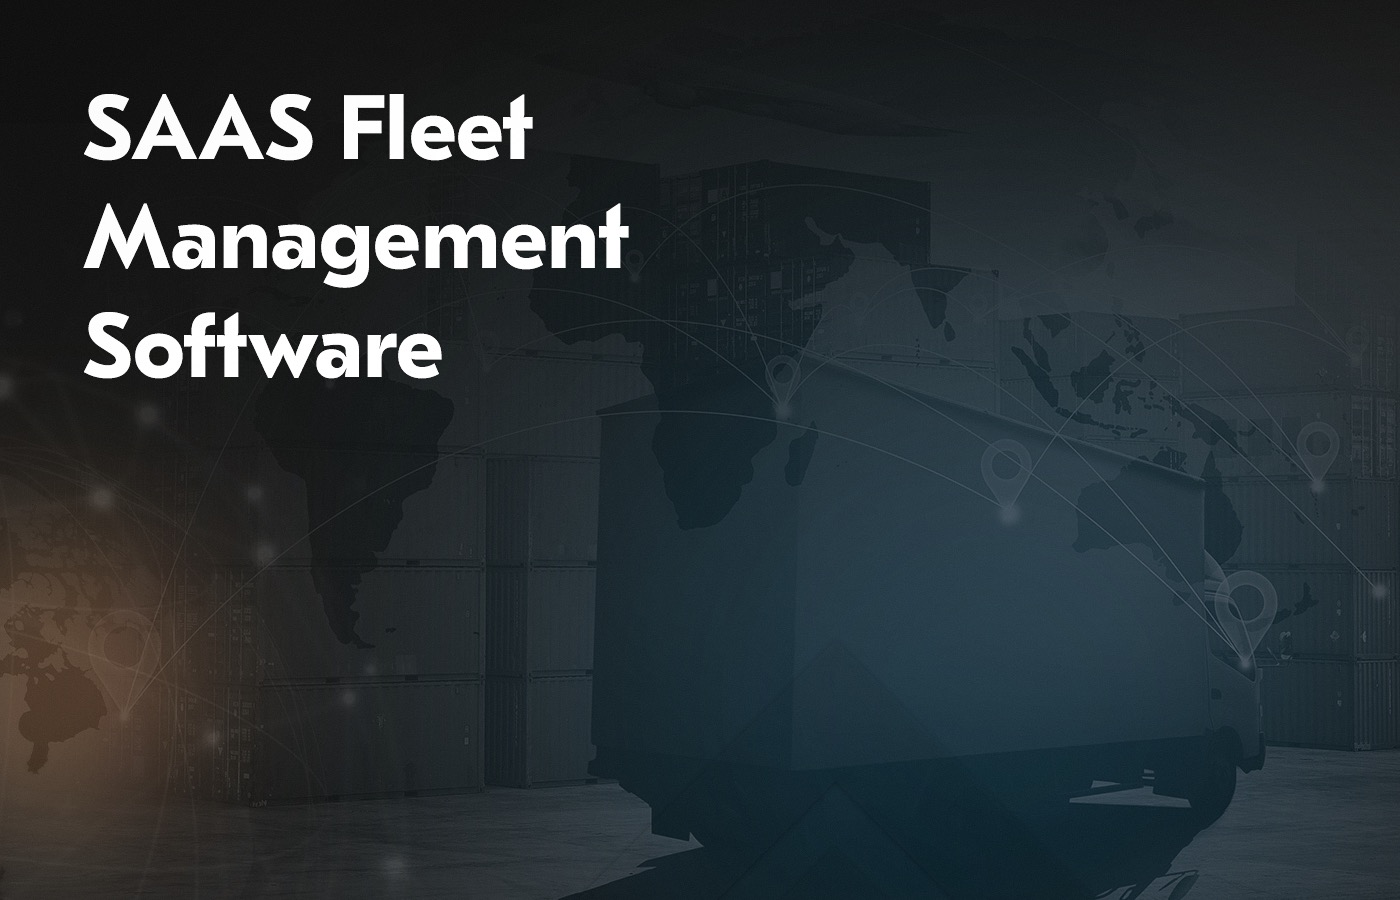 Fleet management SaaS